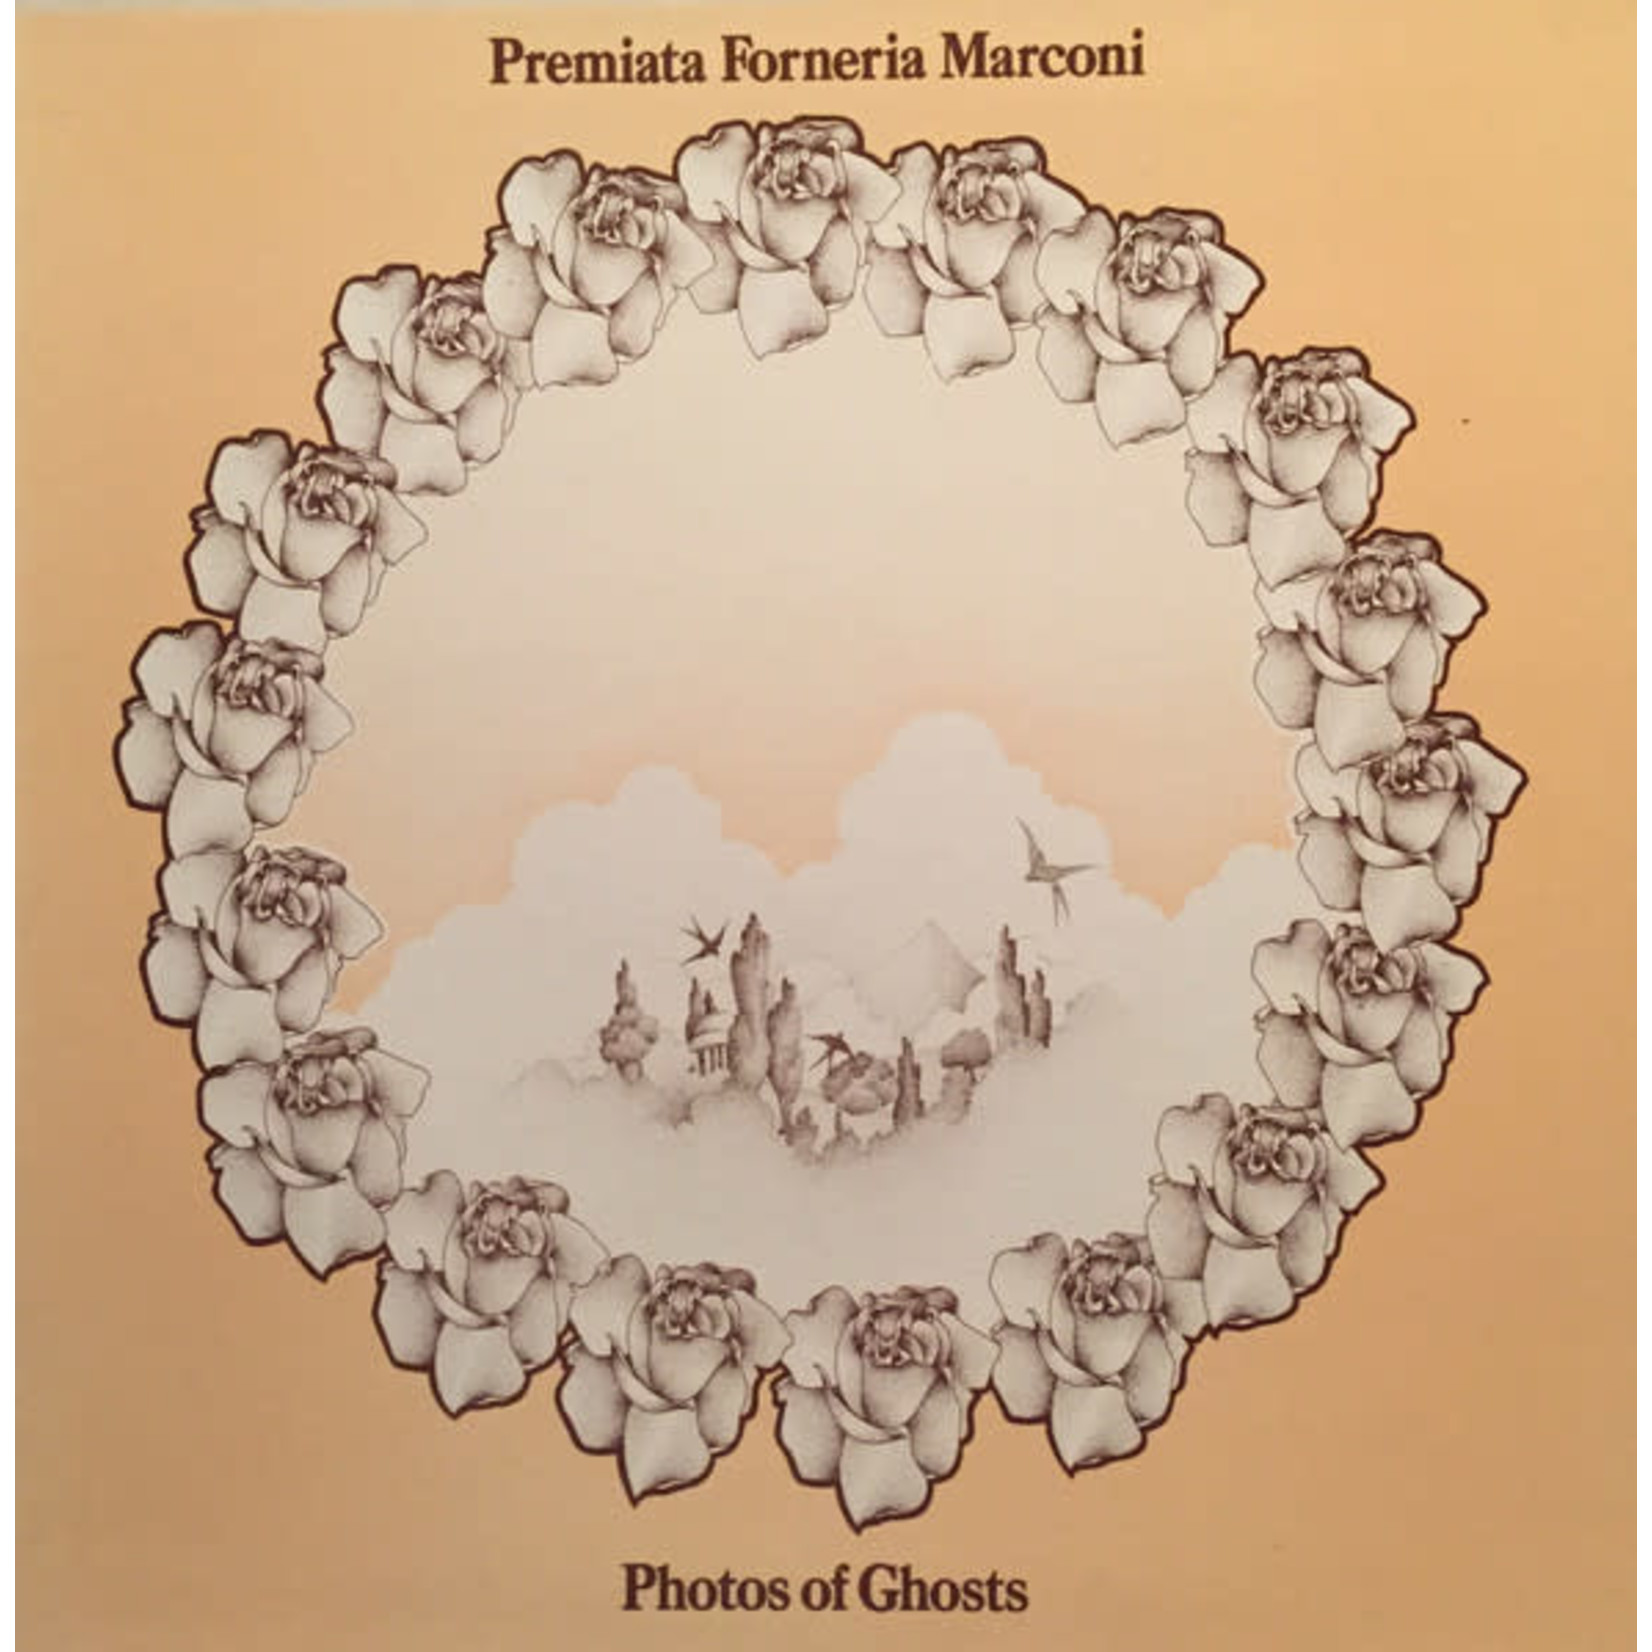 [Vintage] Premiata Forneria Marconi (P.F.M.) - Photos of Ghosts